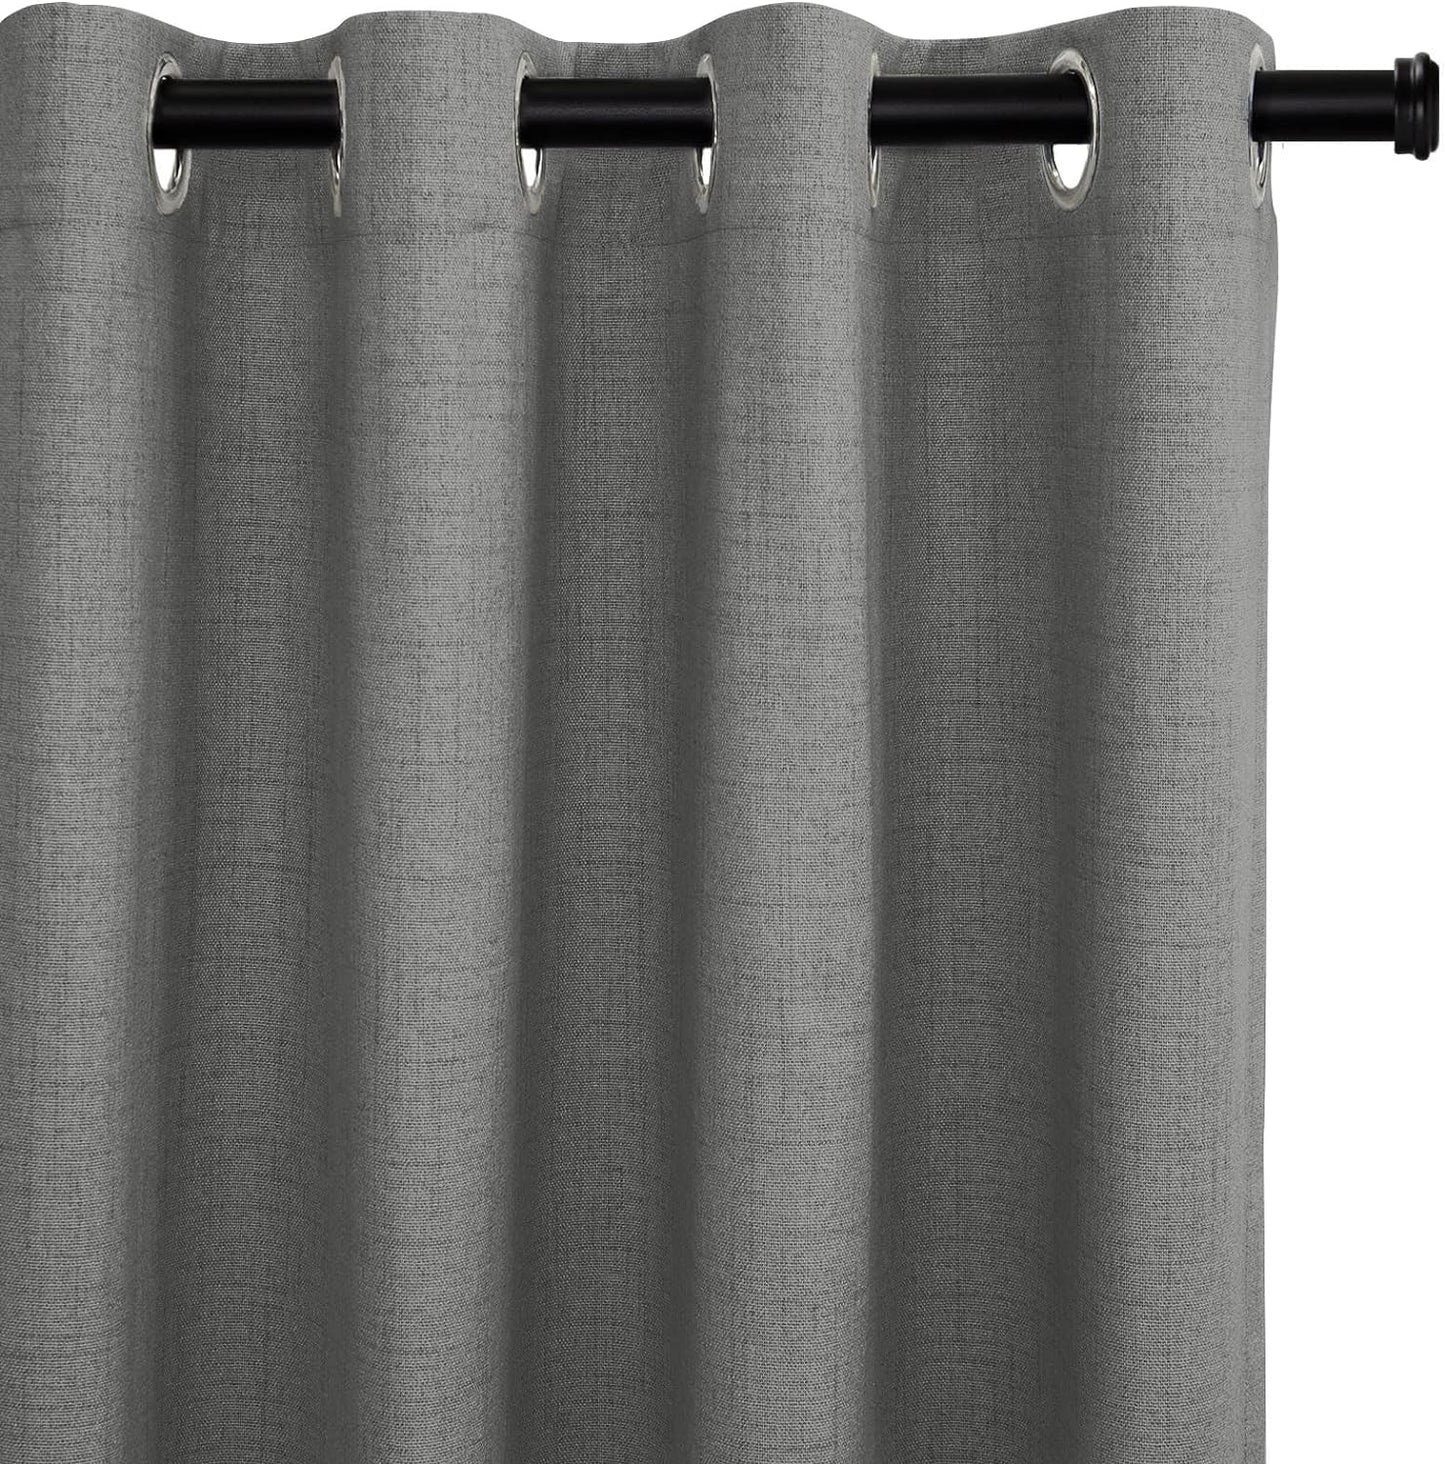 100% Blackout Shield Blackout Curtains Extra Wide Blackout Curtains 100 Inch Patio Door Curtains Linen Blackout Curtain Burlap Curtains for Sliding Glass Door(W100 X L84 1 Panel, Beige)  100% Blackout Shield Dark Gray 50''W X 84''L 